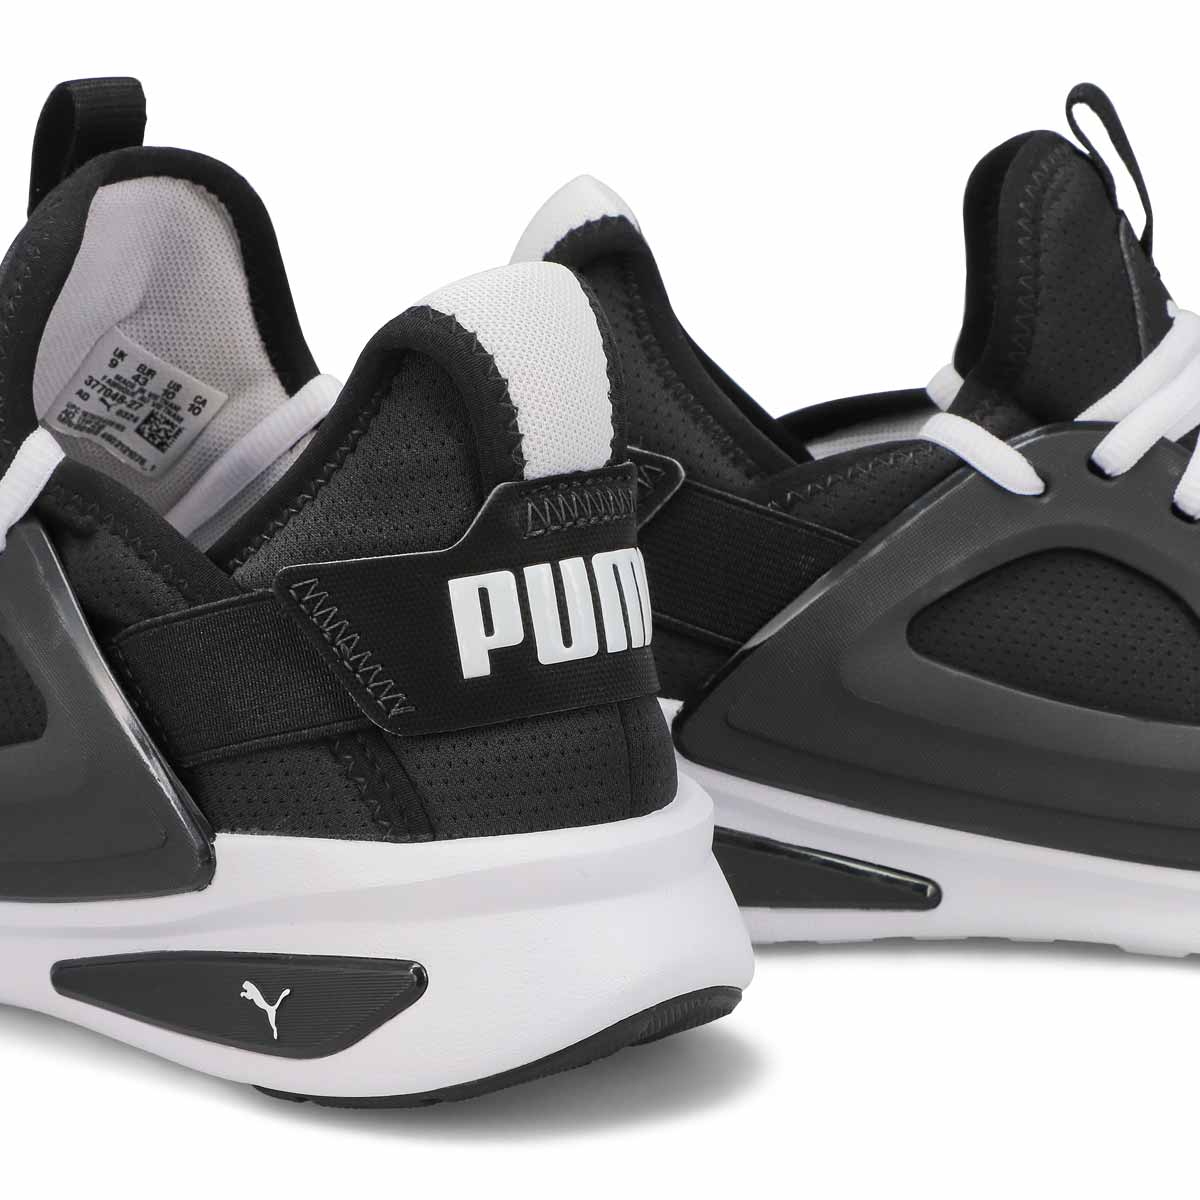 Men's Softride Enzo Evo Sneaker - Puma Black/Puma White